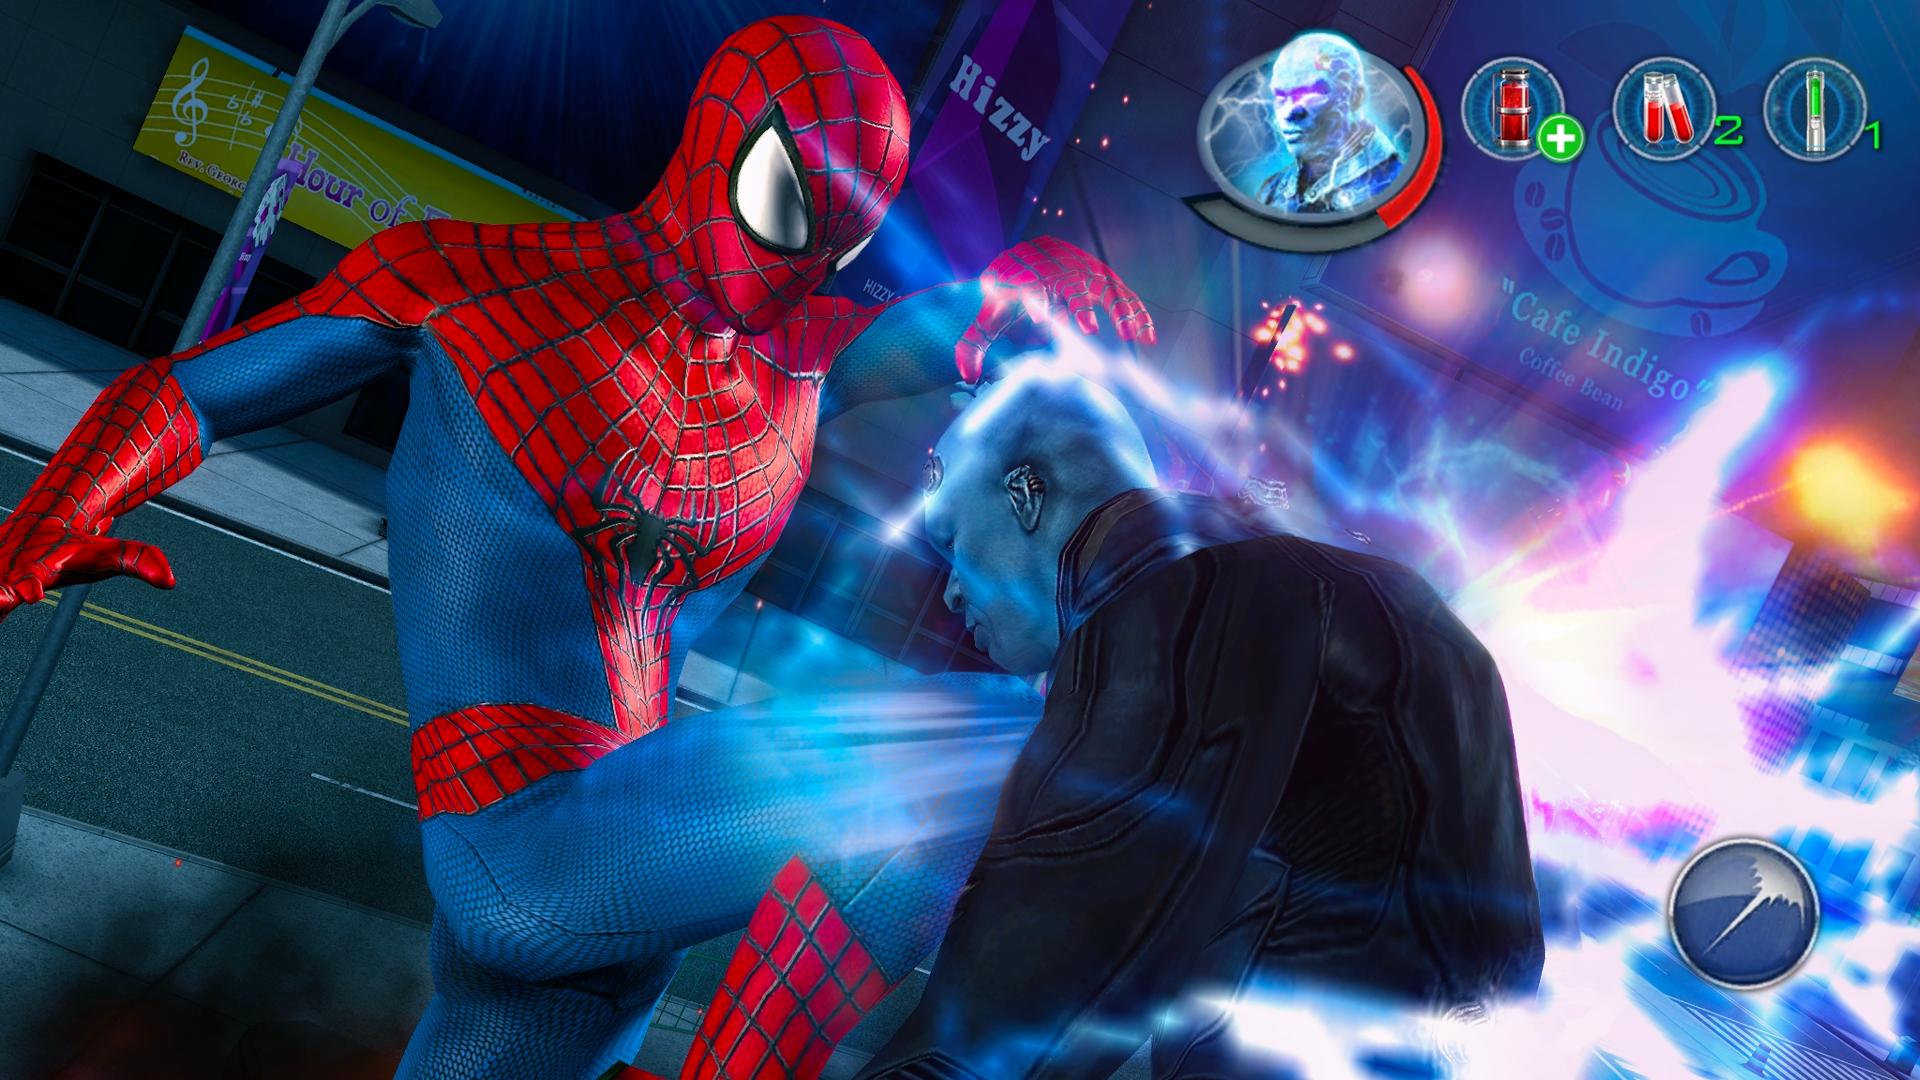 Человек паук бесплатная игра на телефон. The amazing Spider-man 2 (новый человек — паук 2). Игра человек паук Спайдермен. Человек паук эмейзинг 2 игра. Новый человек паук 1 игра.